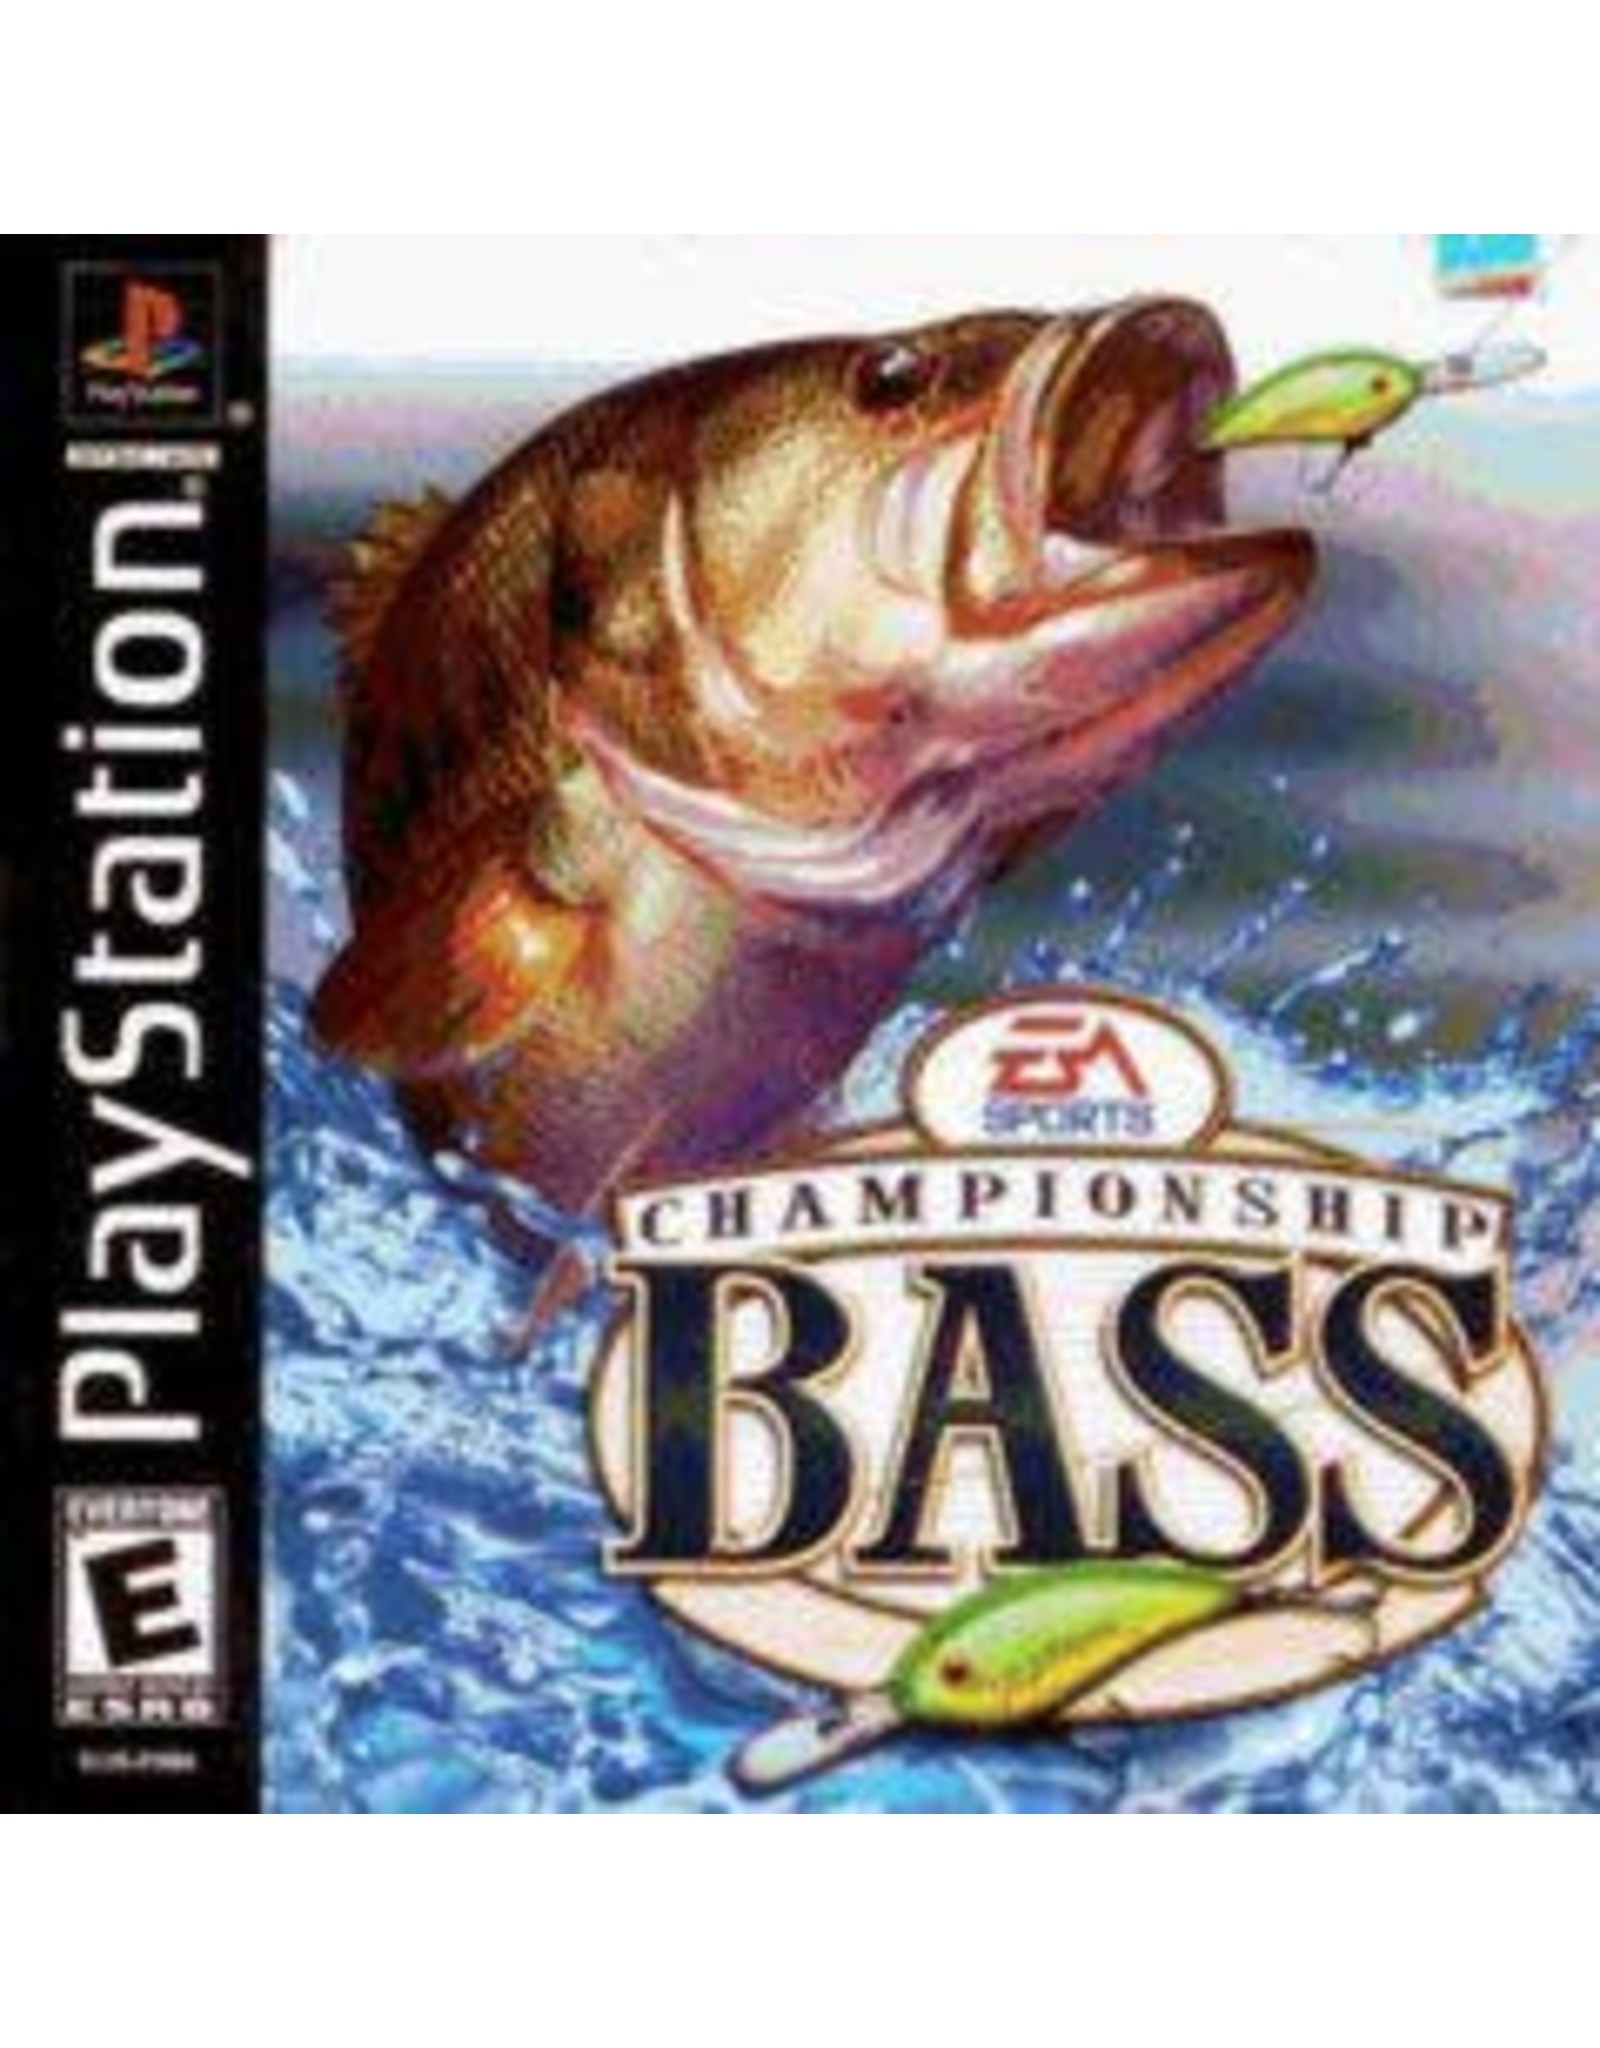 Playstation Championship Bass (CiB)